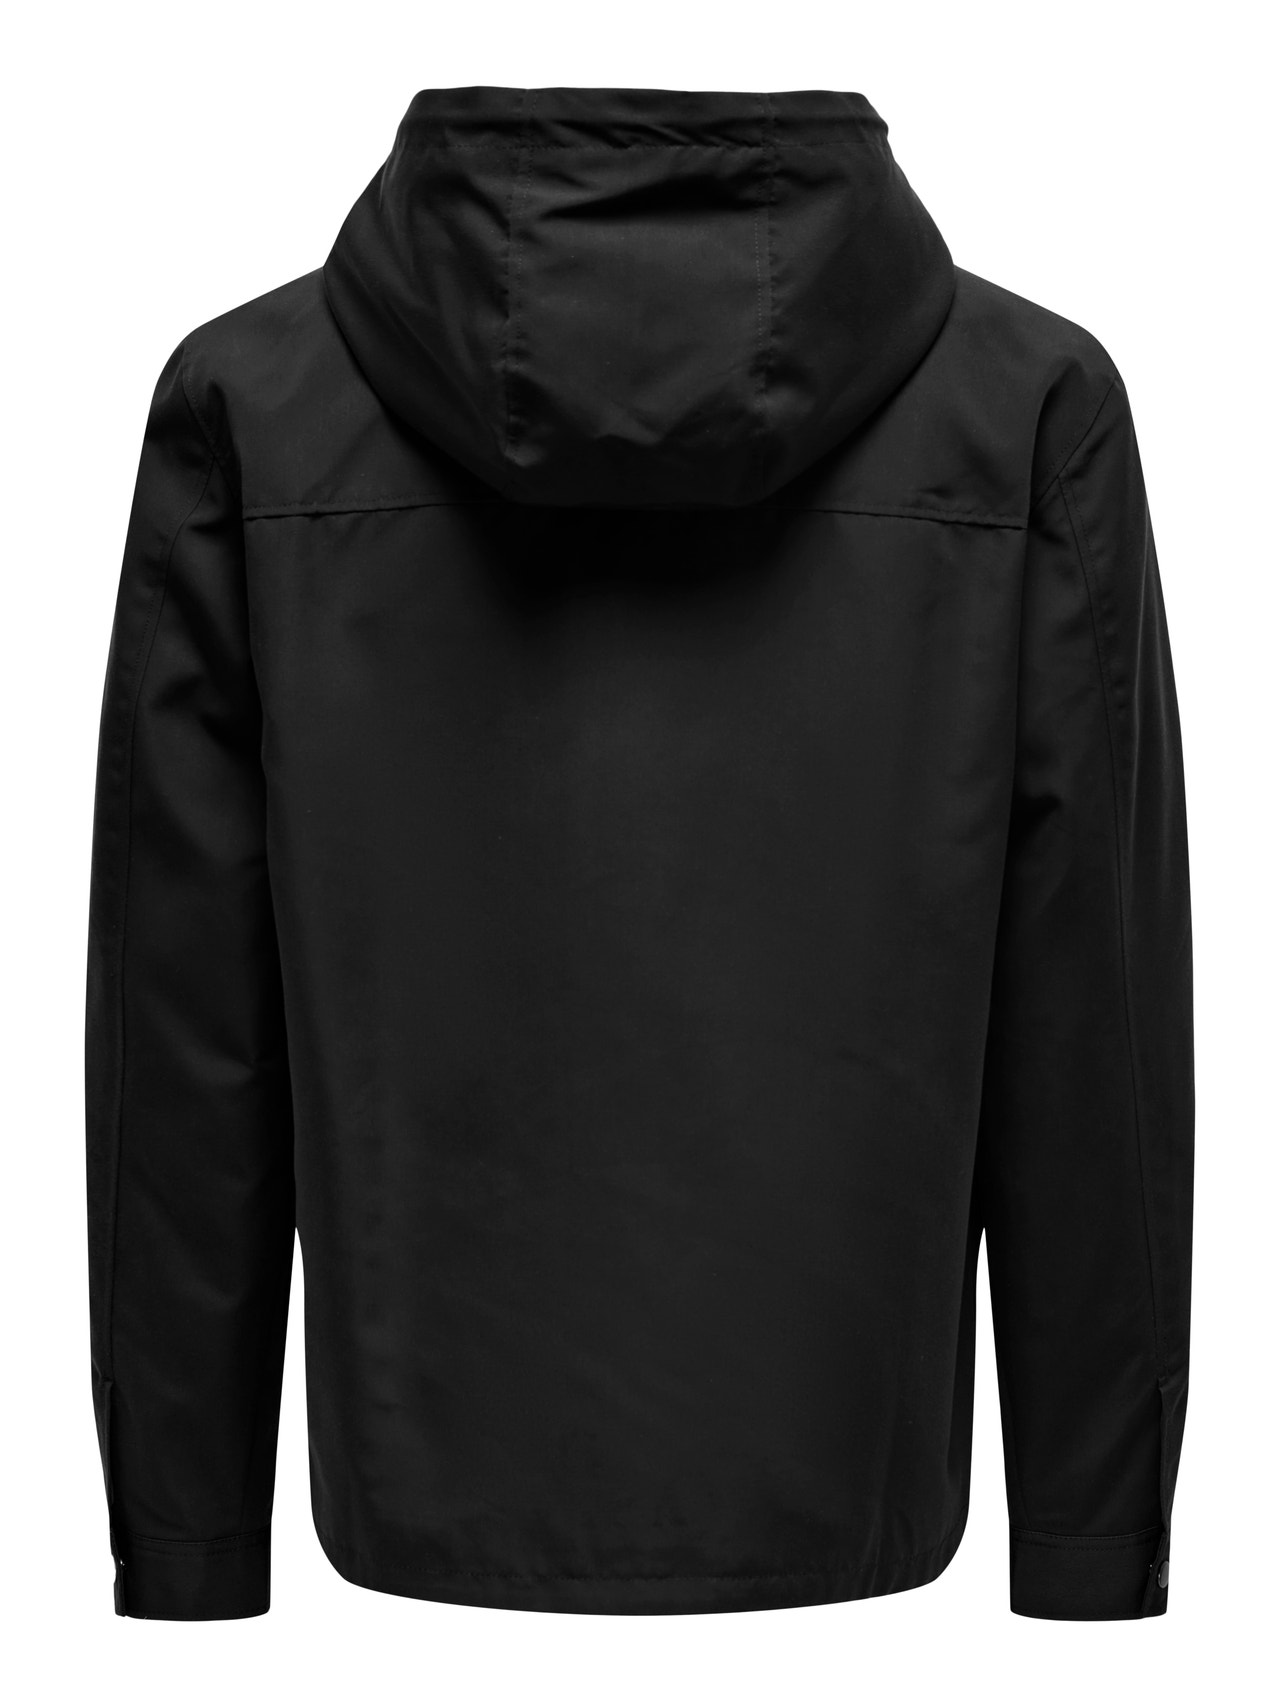 ONLY & SONS Hood with string regulation Jacket -Black - 22024156